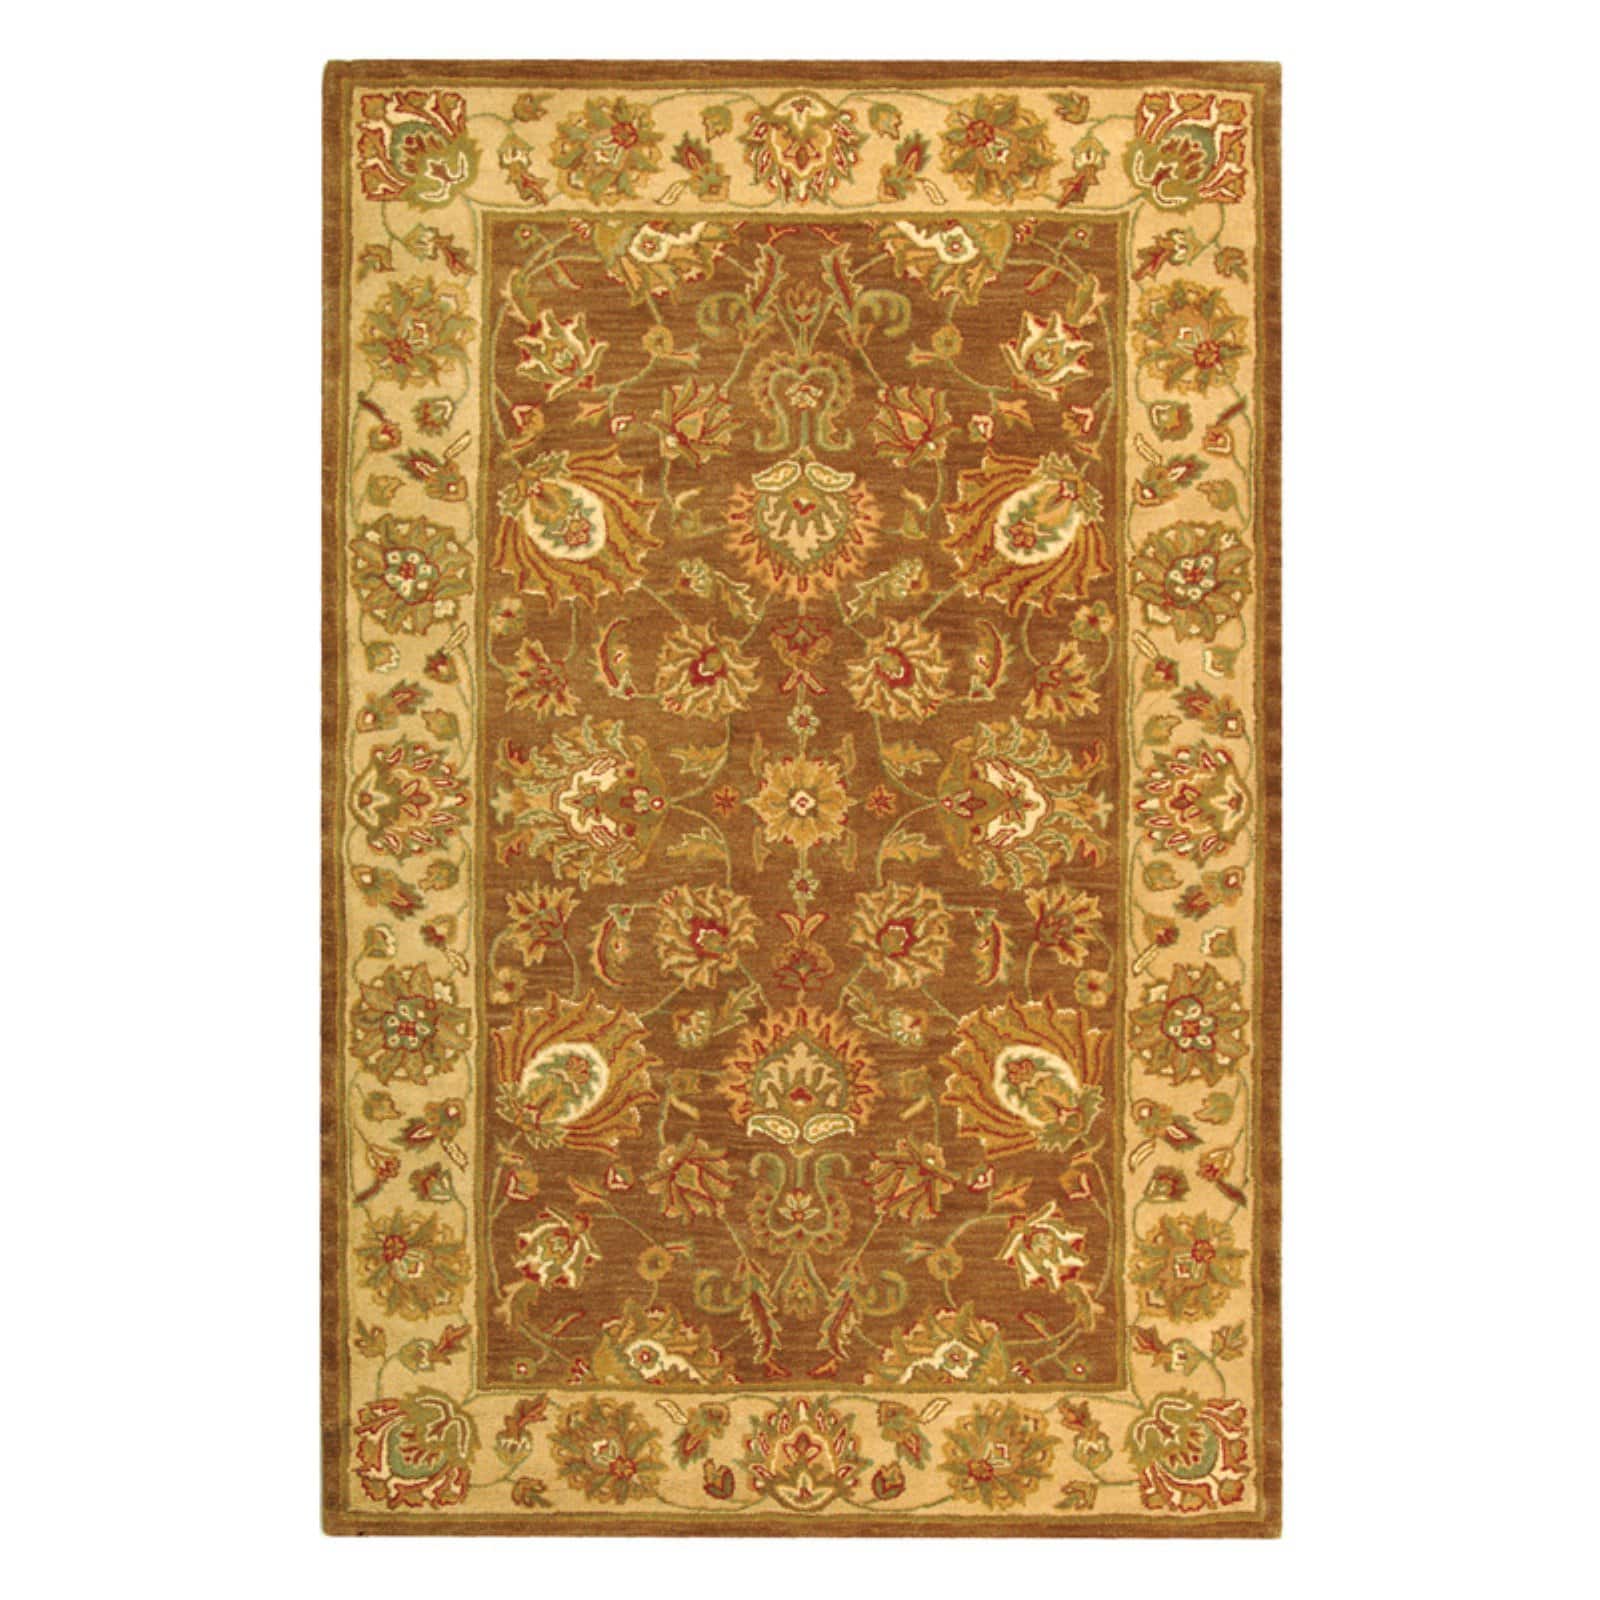 SAFAVIEH Heritage Regis Traditional Wool Area Rug, Brown/Ivory, 8'3" x 11' - image 4 of 9